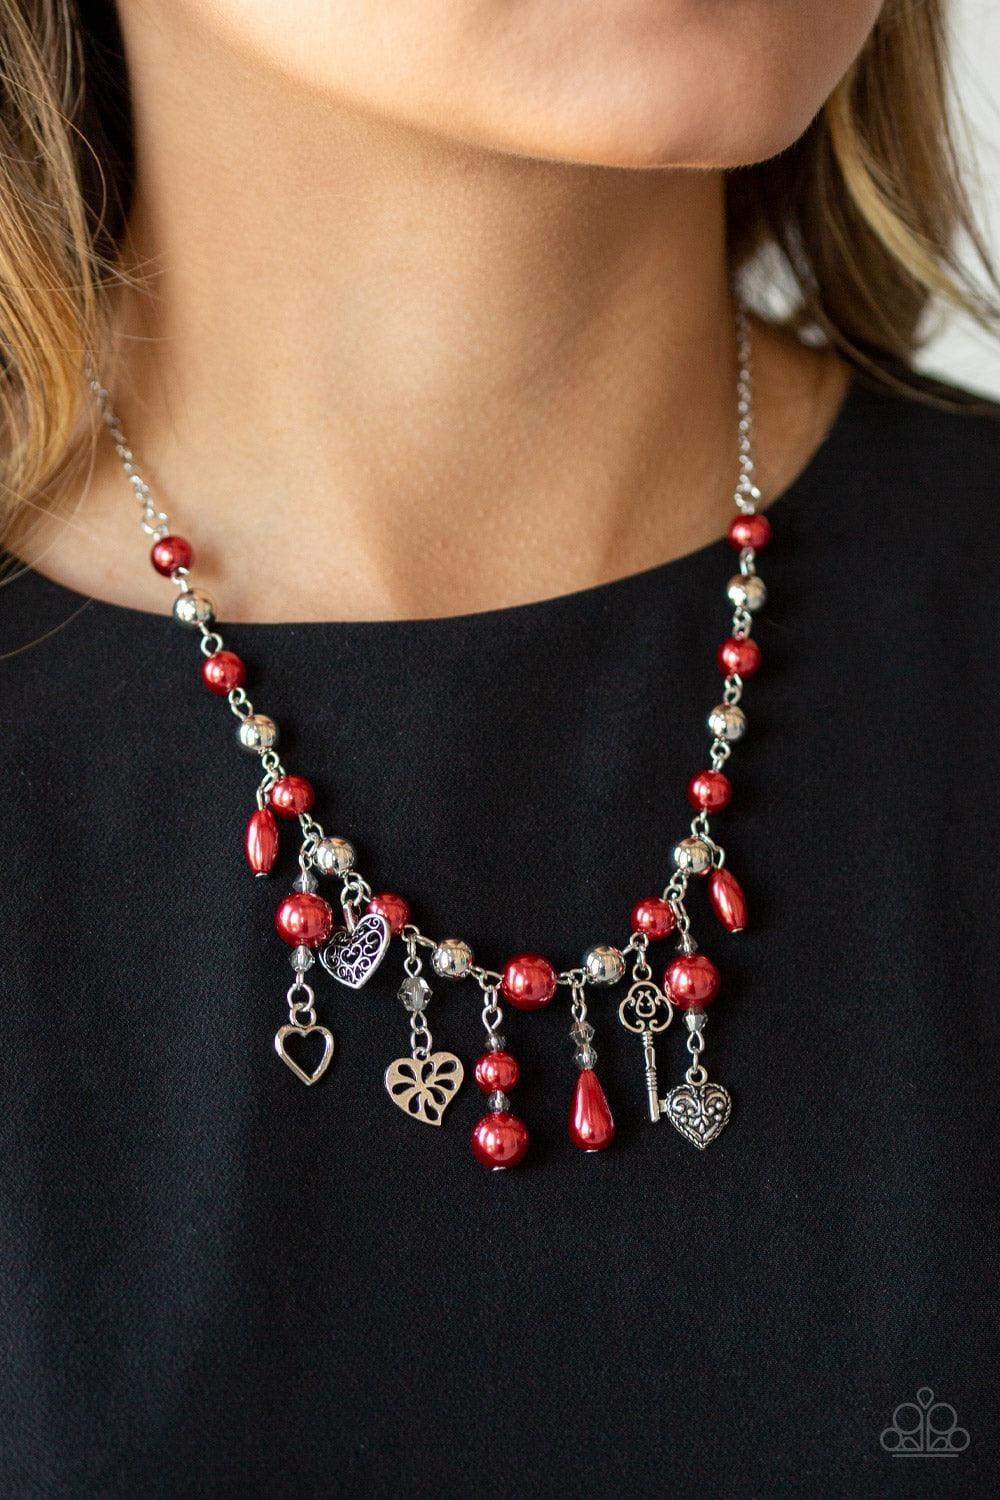 Paparazzi Accessories - Renaissance Romance - Red Necklace - Bling by JessieK